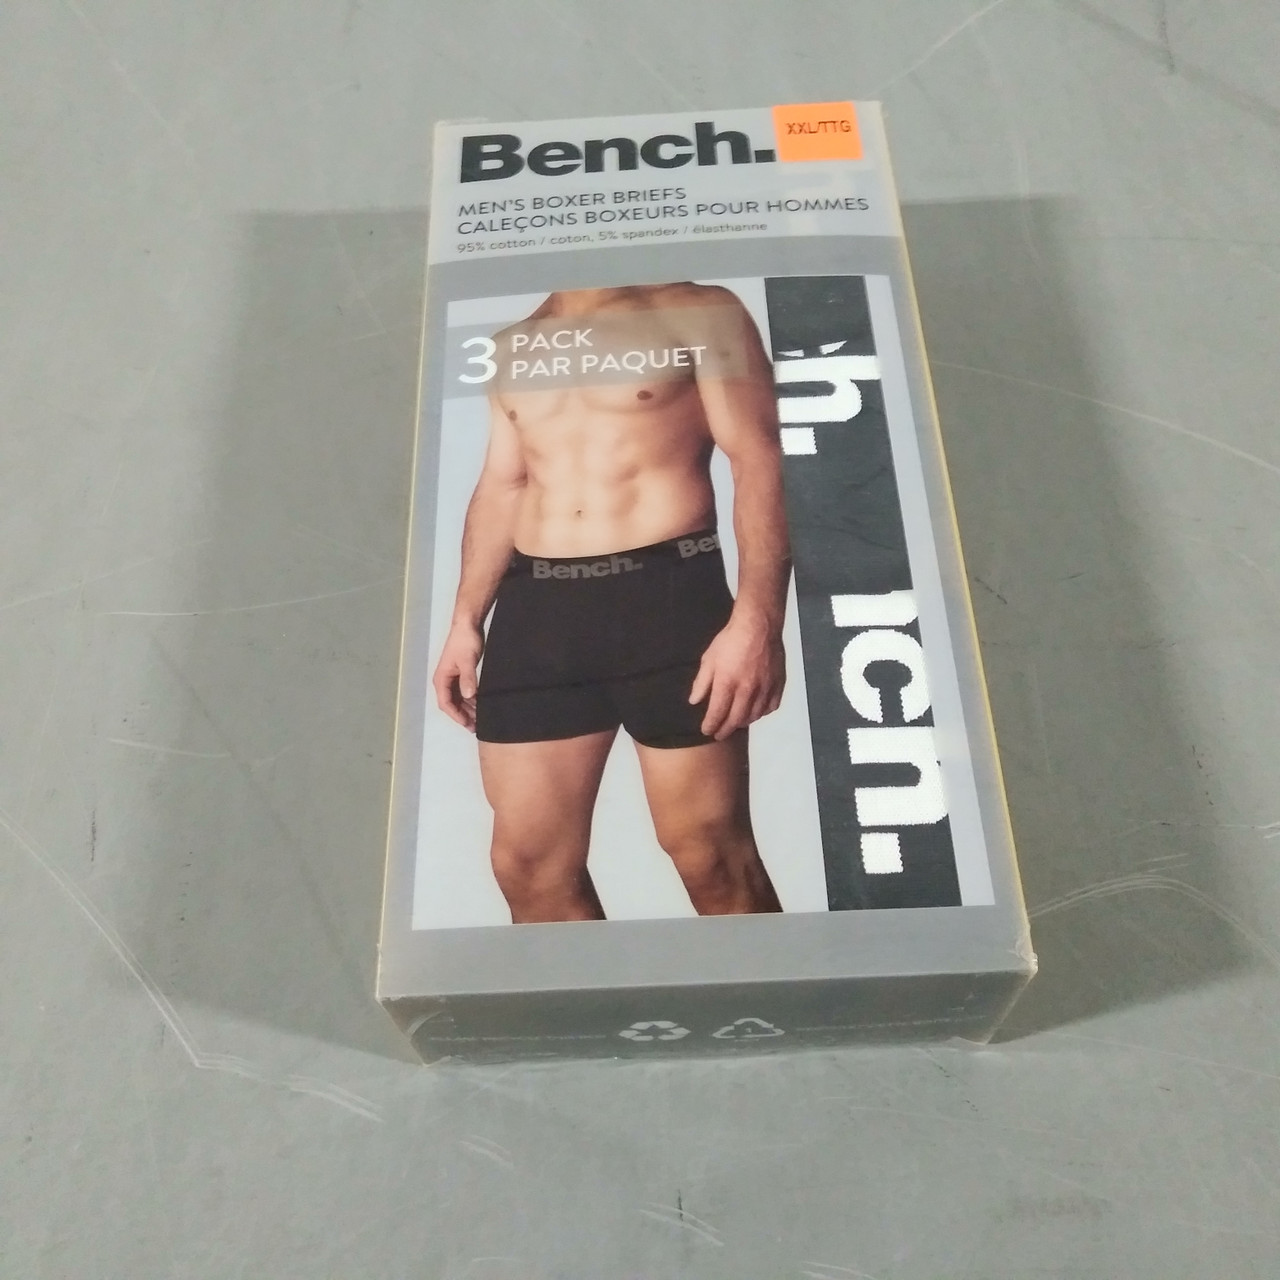 Bench 3 Pack Men's Boxers Underwear Boxer Shorts Under Pants Gift